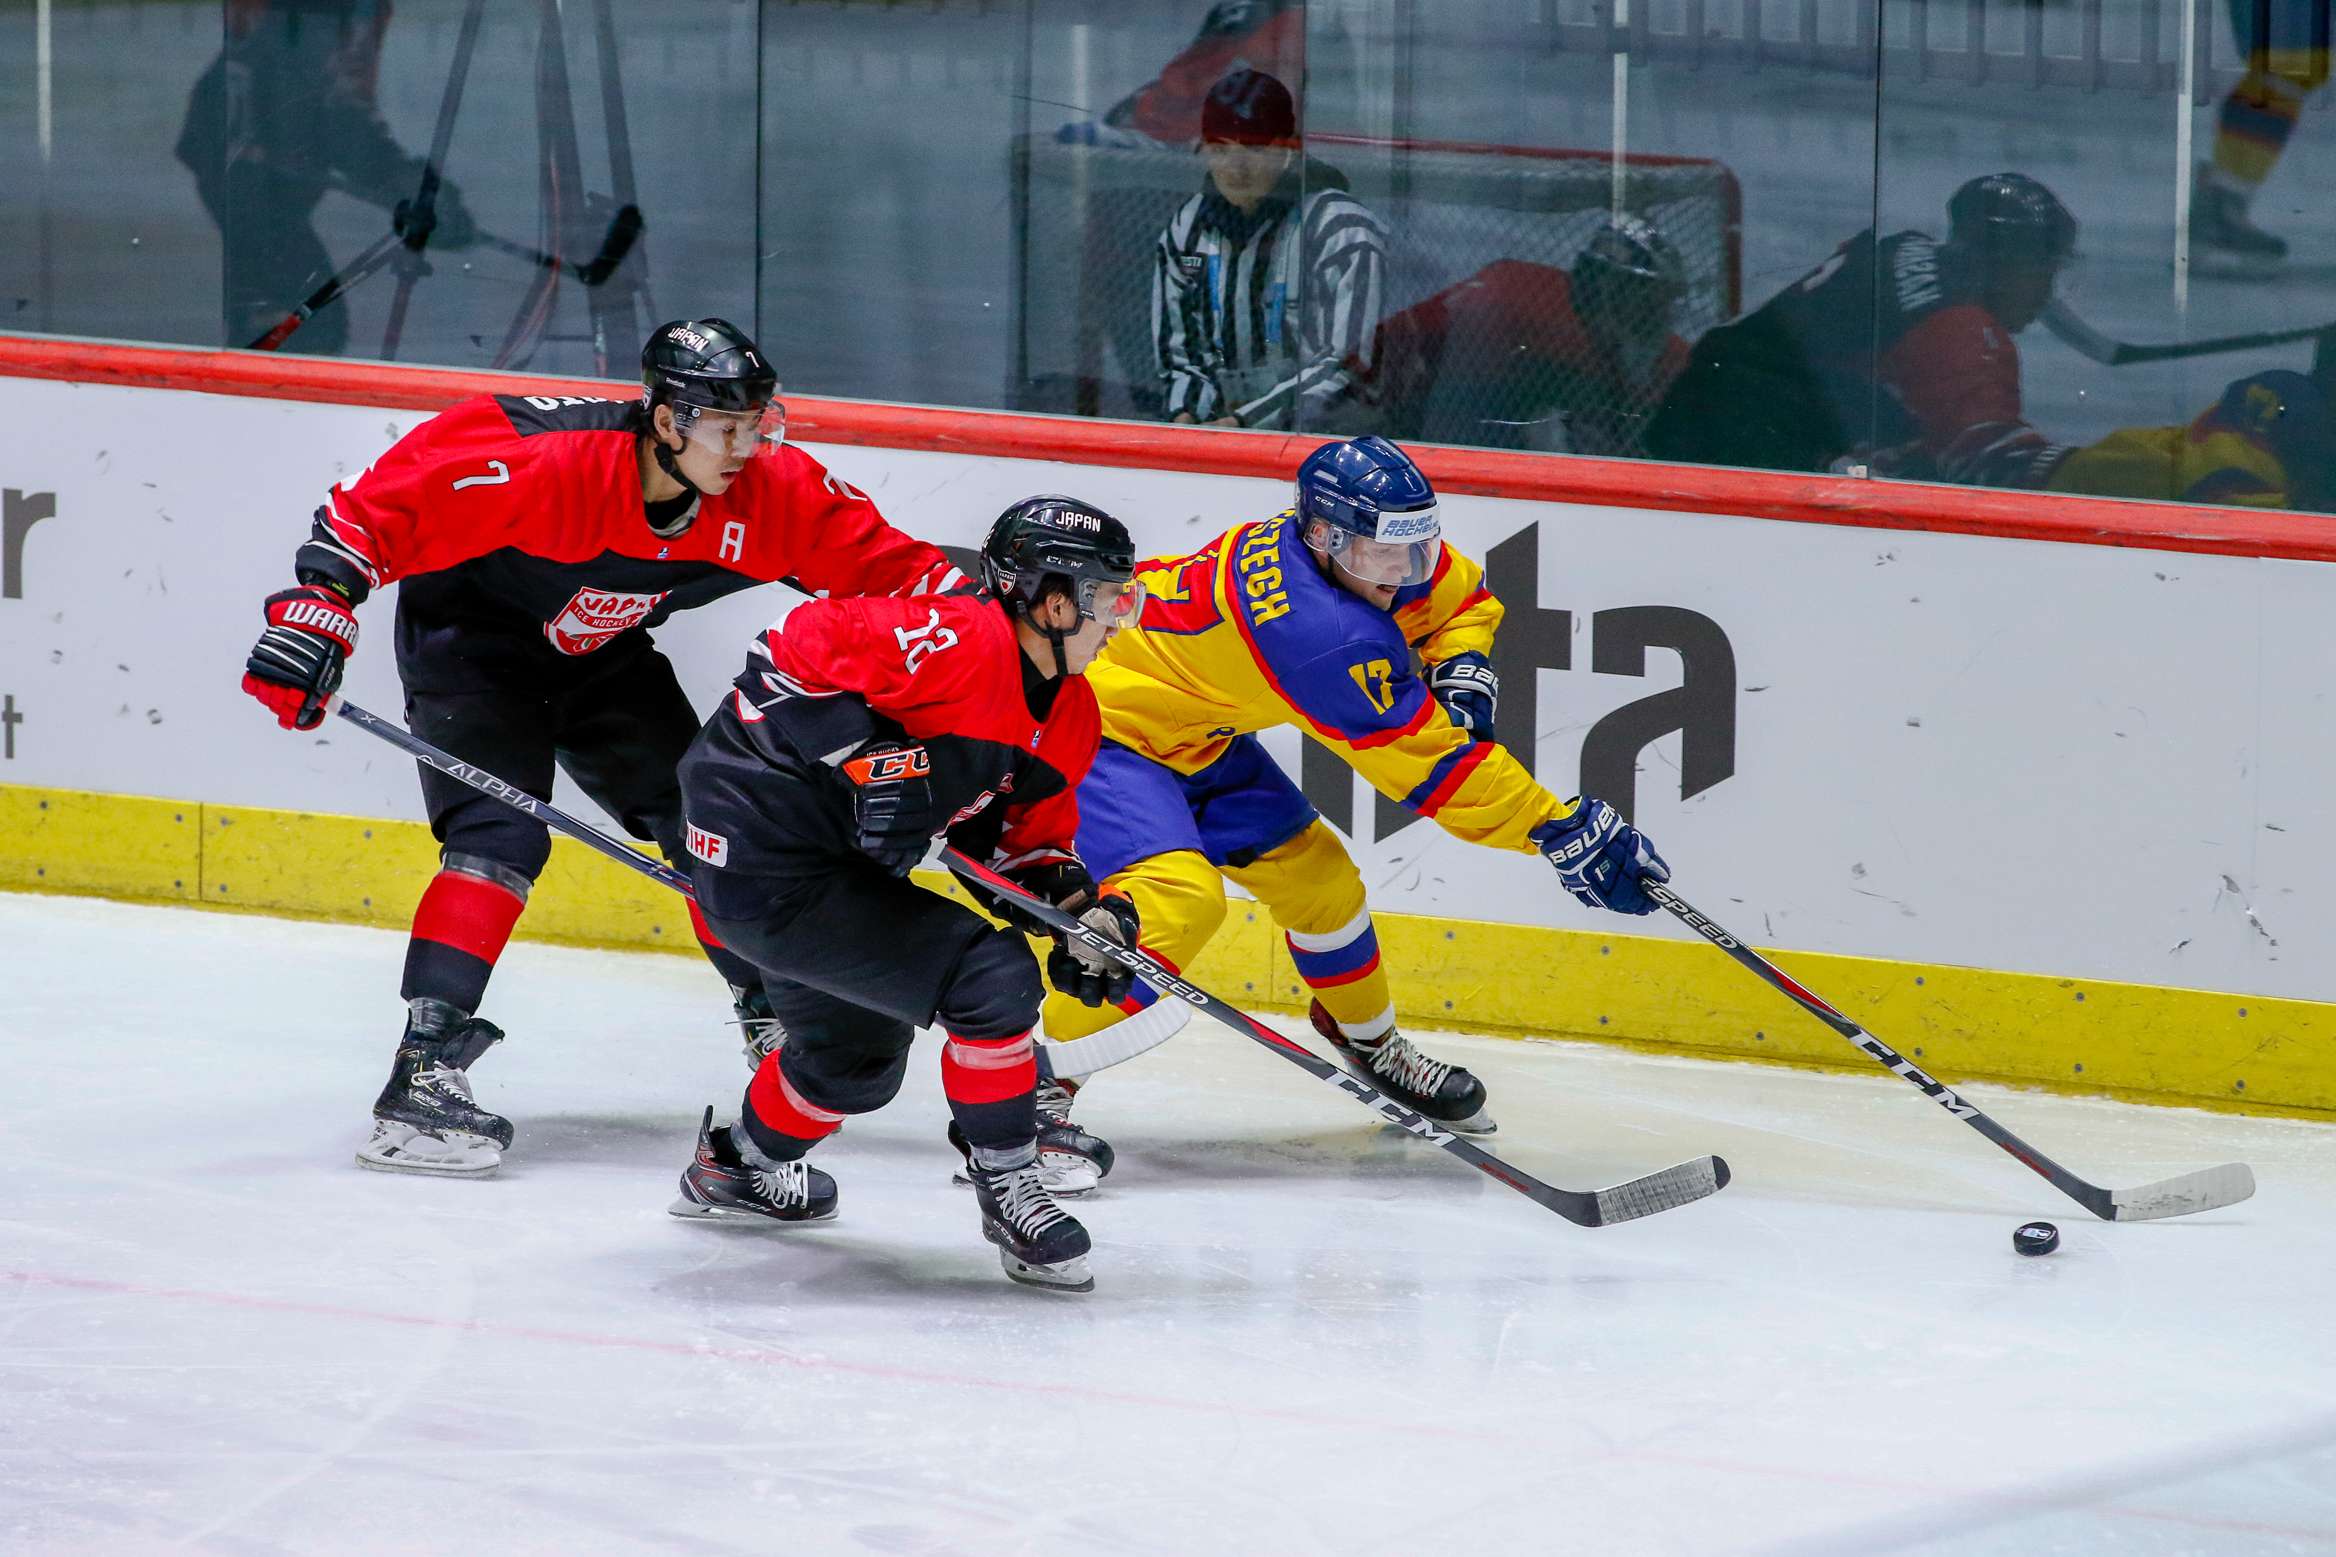 IIHF - Gallery: Japan vs. Romania - 2019 IIHF Ice Hockey World